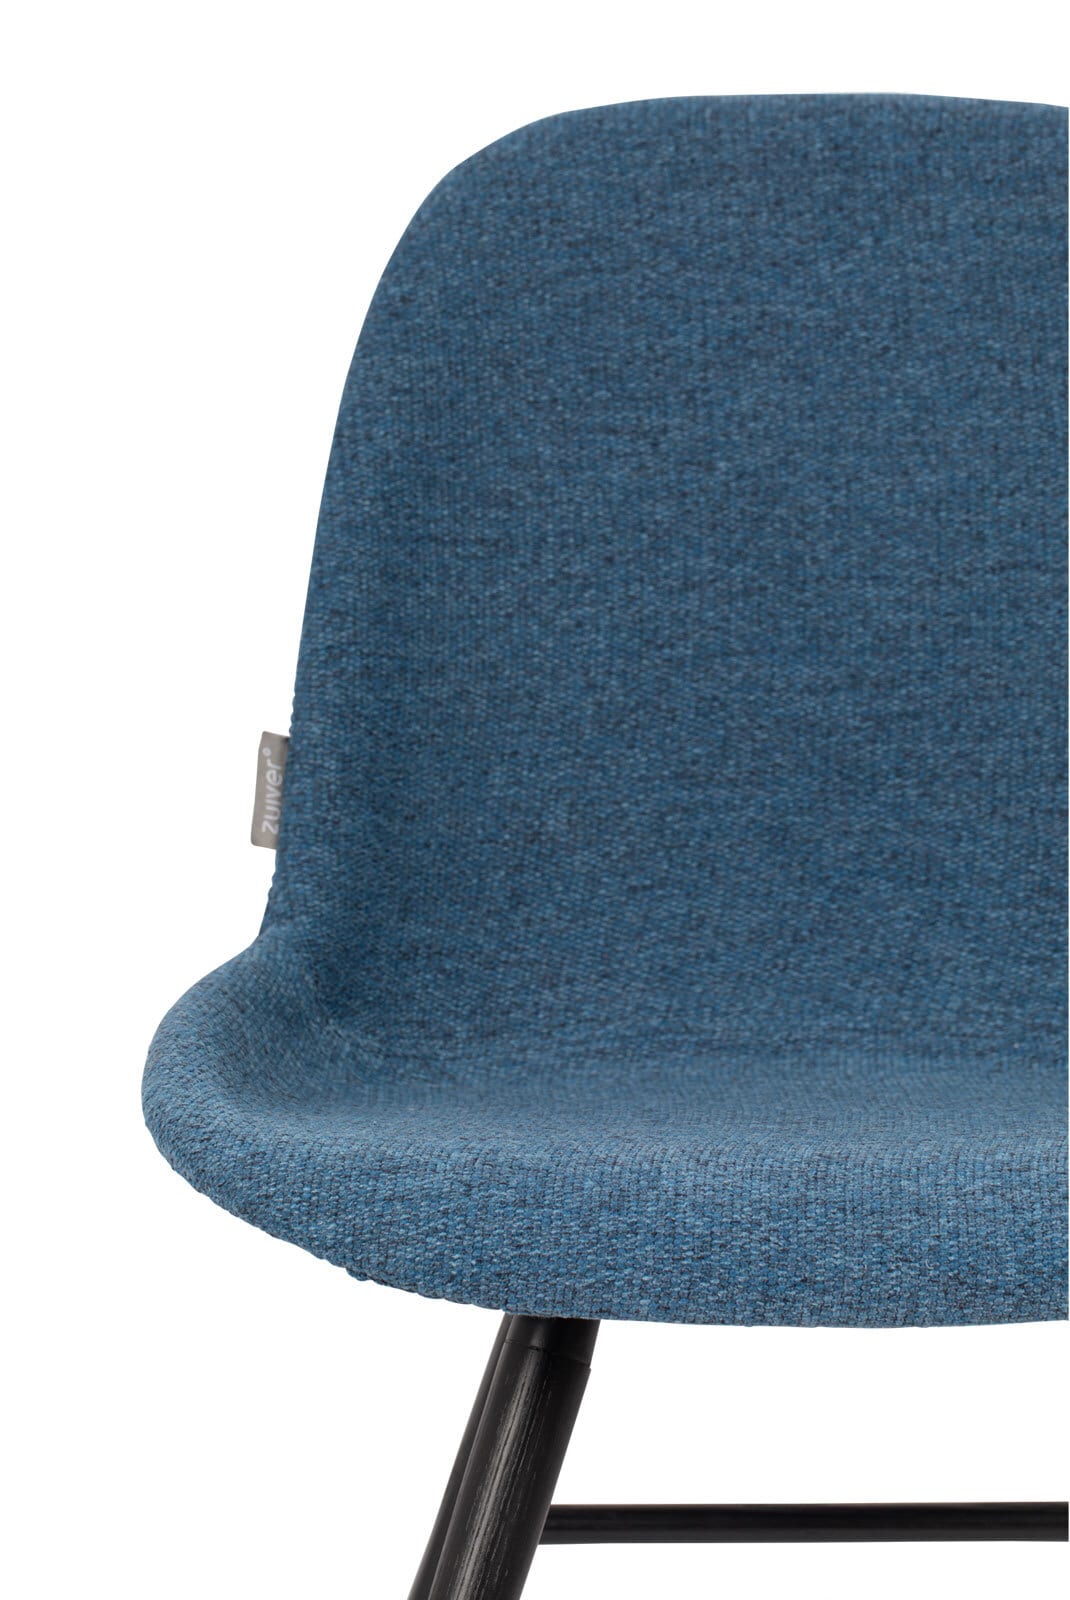 zuiver Stuhl ALBER KUIP SOFT Textil blau